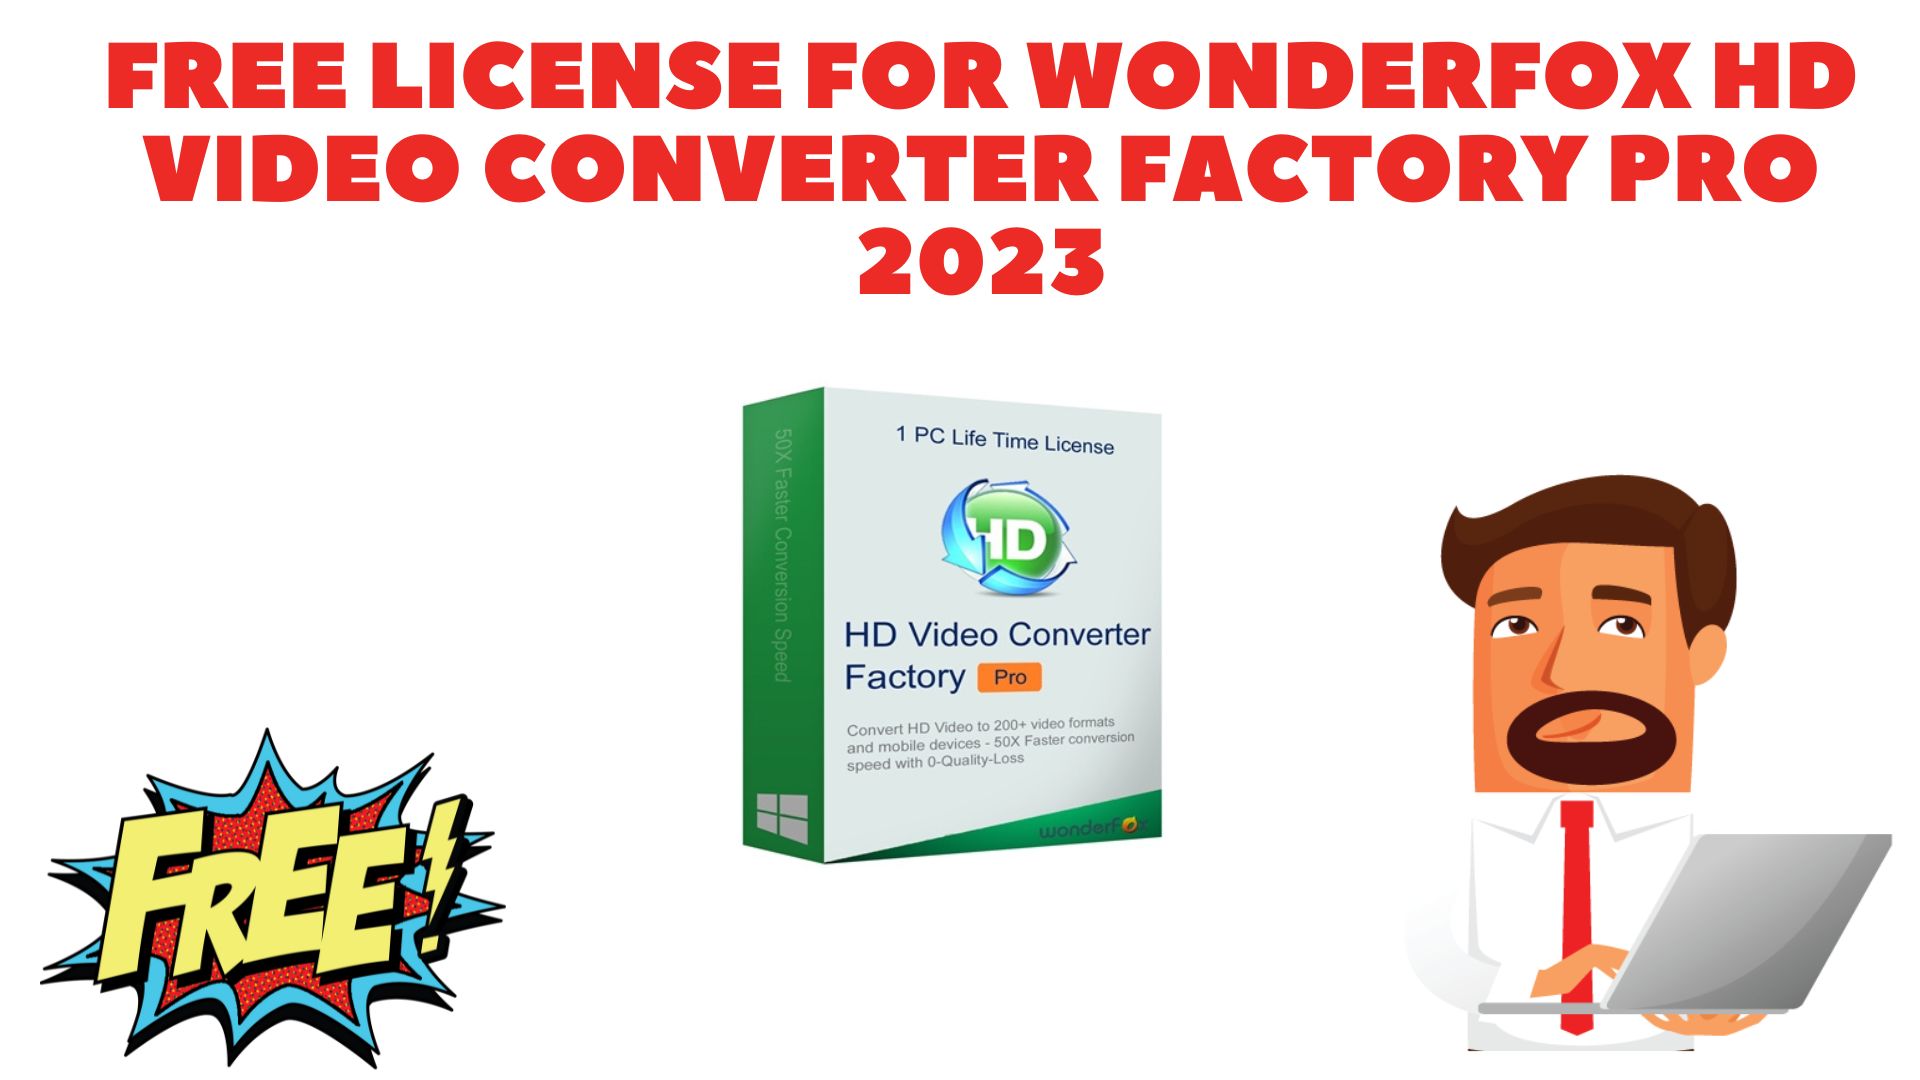 Free license for wonderfox hd video converter factory pro 2023